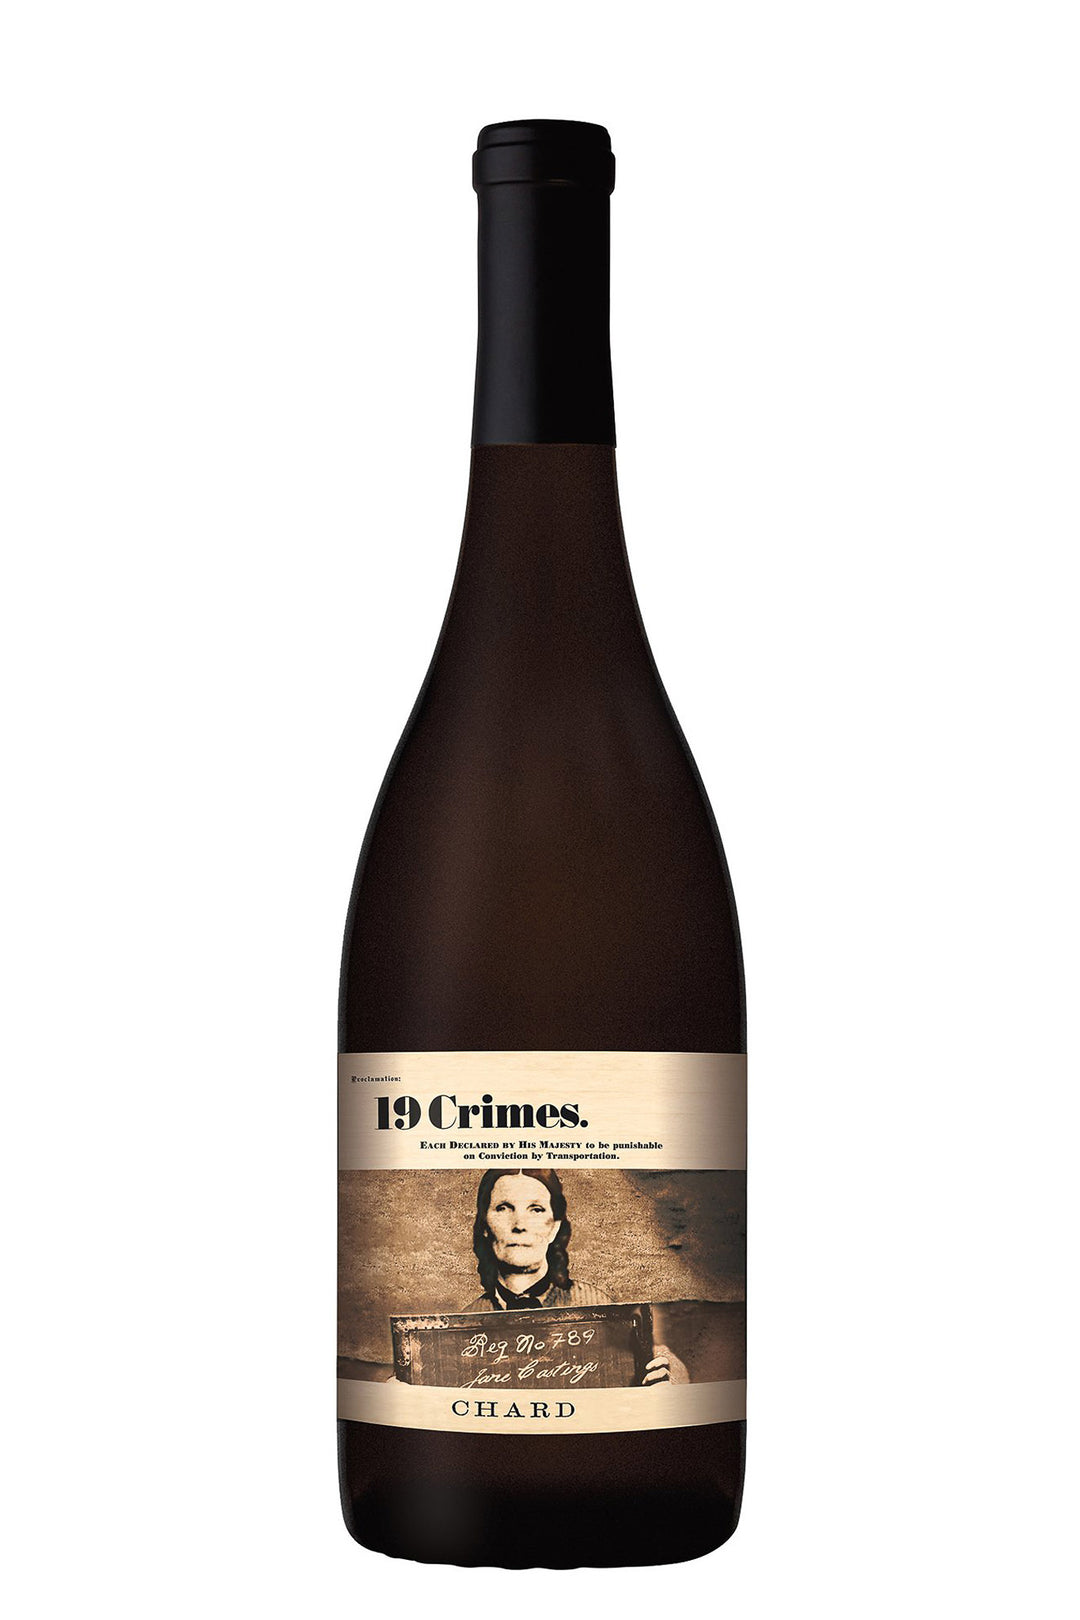 19 Crimes Hard Chard Chardonnay 2020 • Weisswein • Australien • South East Australia • 0.75 l